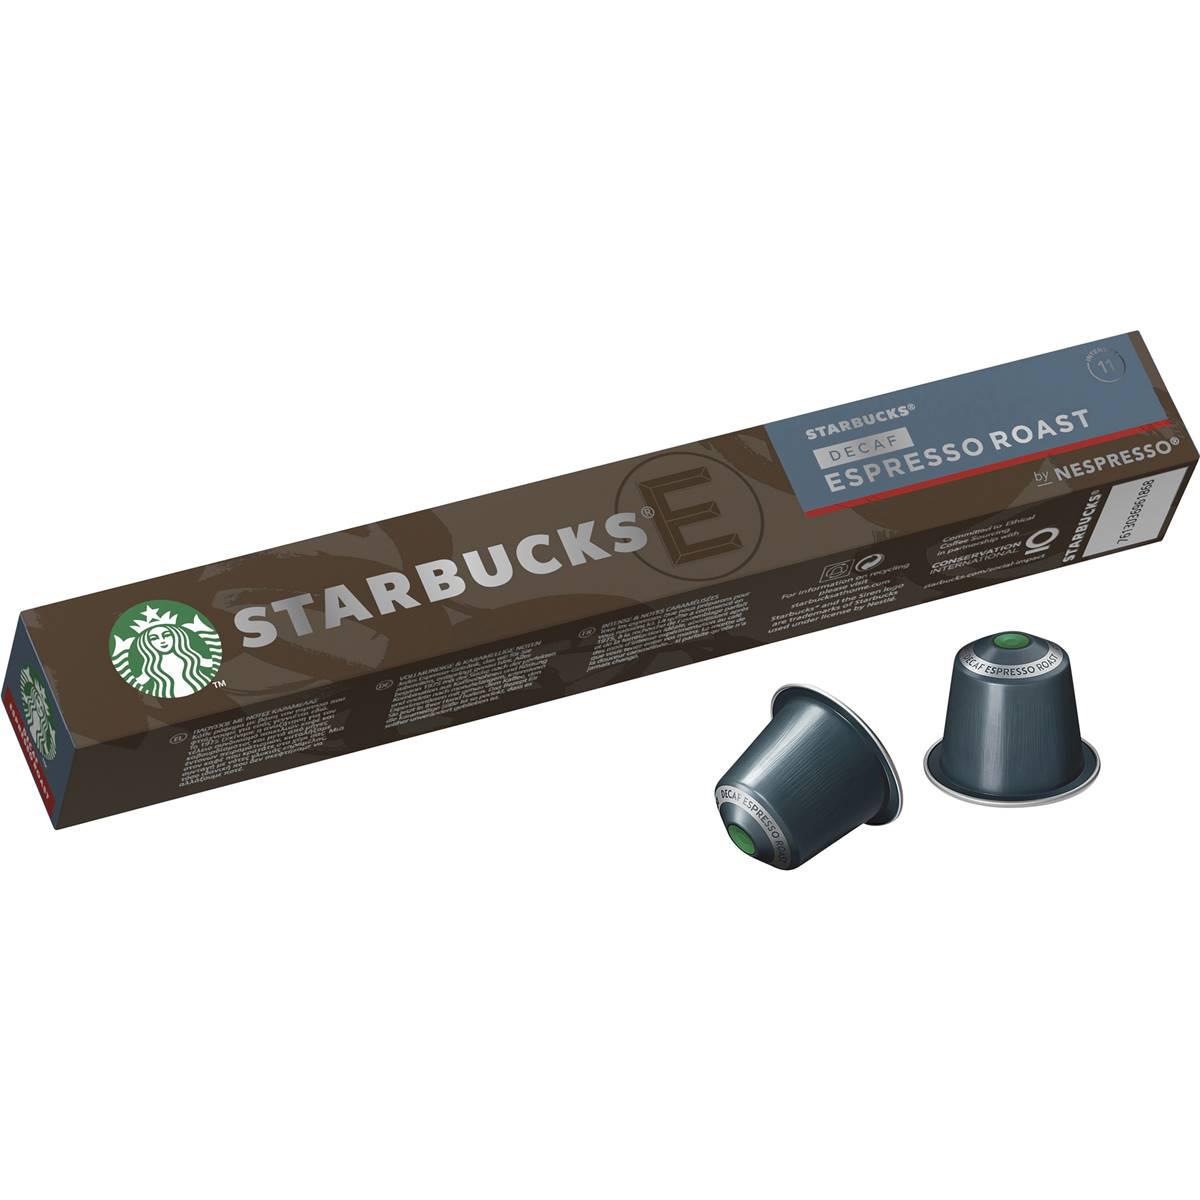 Starbucks By Nespresso Decaf Espresso Roast Coffee Pods Capsules 10 Pack